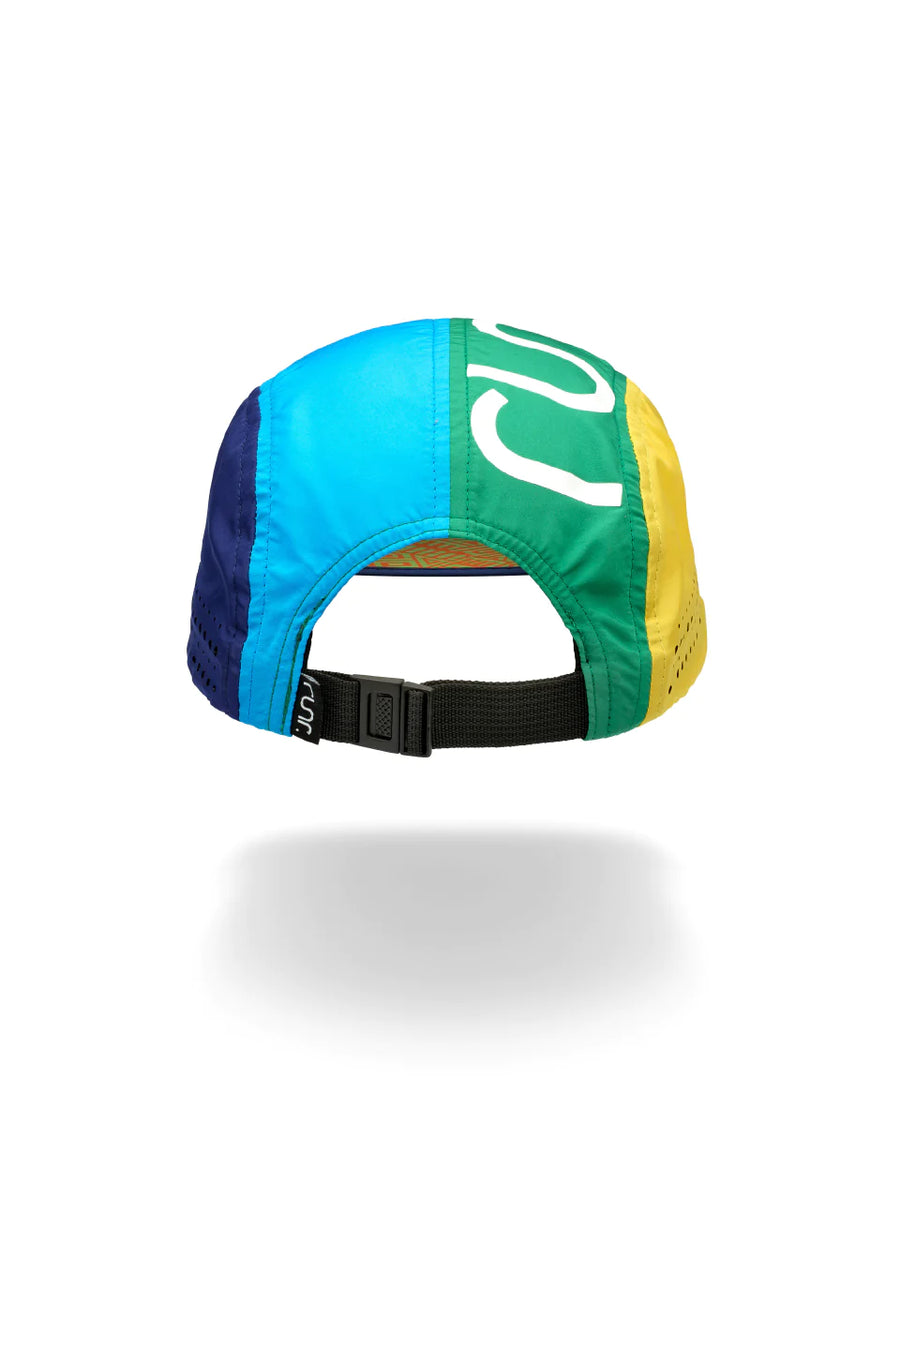 Runr Rio Technical Running Hat